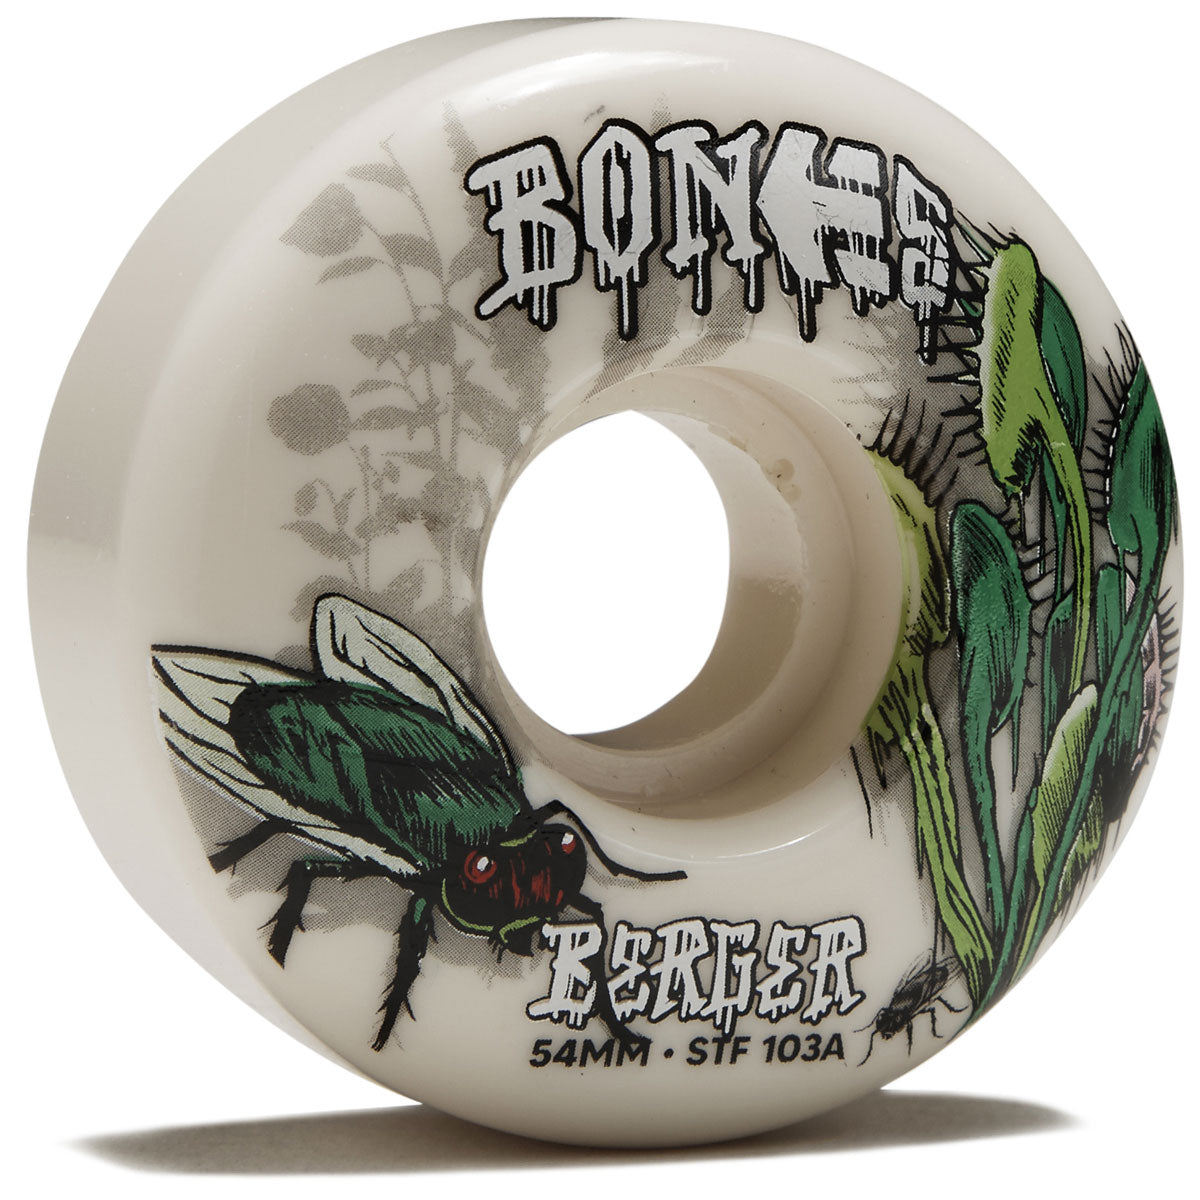 Bones x Etnies Matt Berger 103A V3 Slim Skateboard Wheels - 54mm image 1